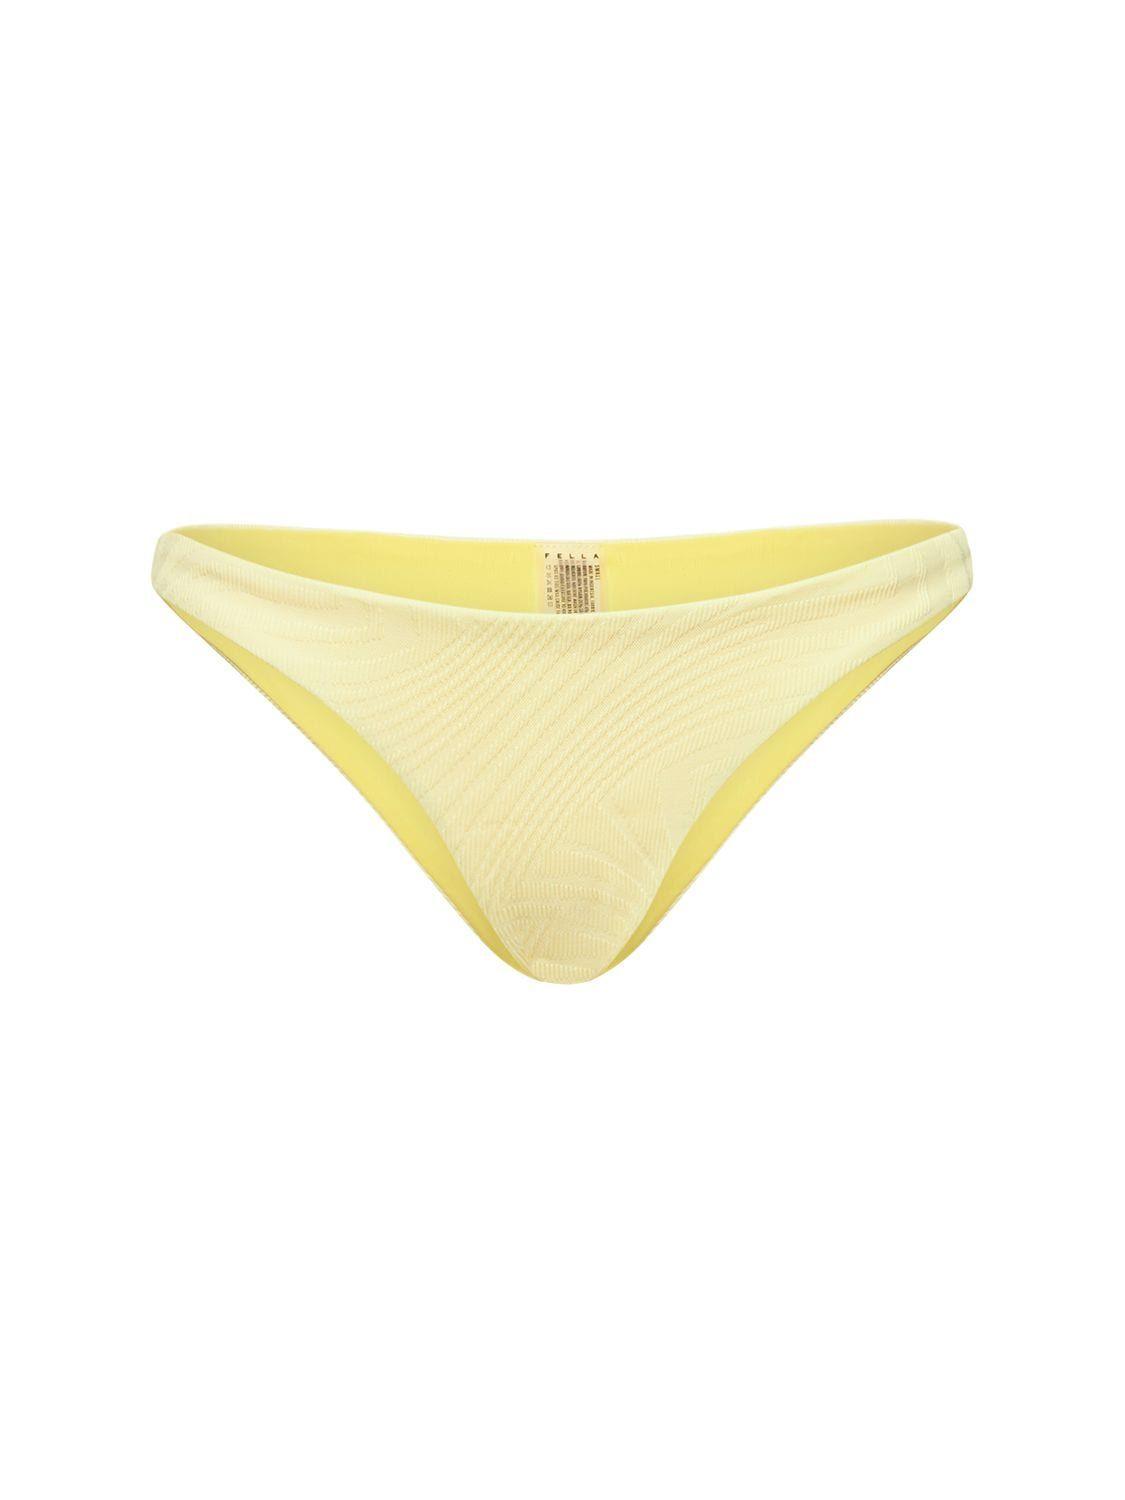 FELLA SWIM Mr Smith Bikini Bottom in Yellow | Lyst